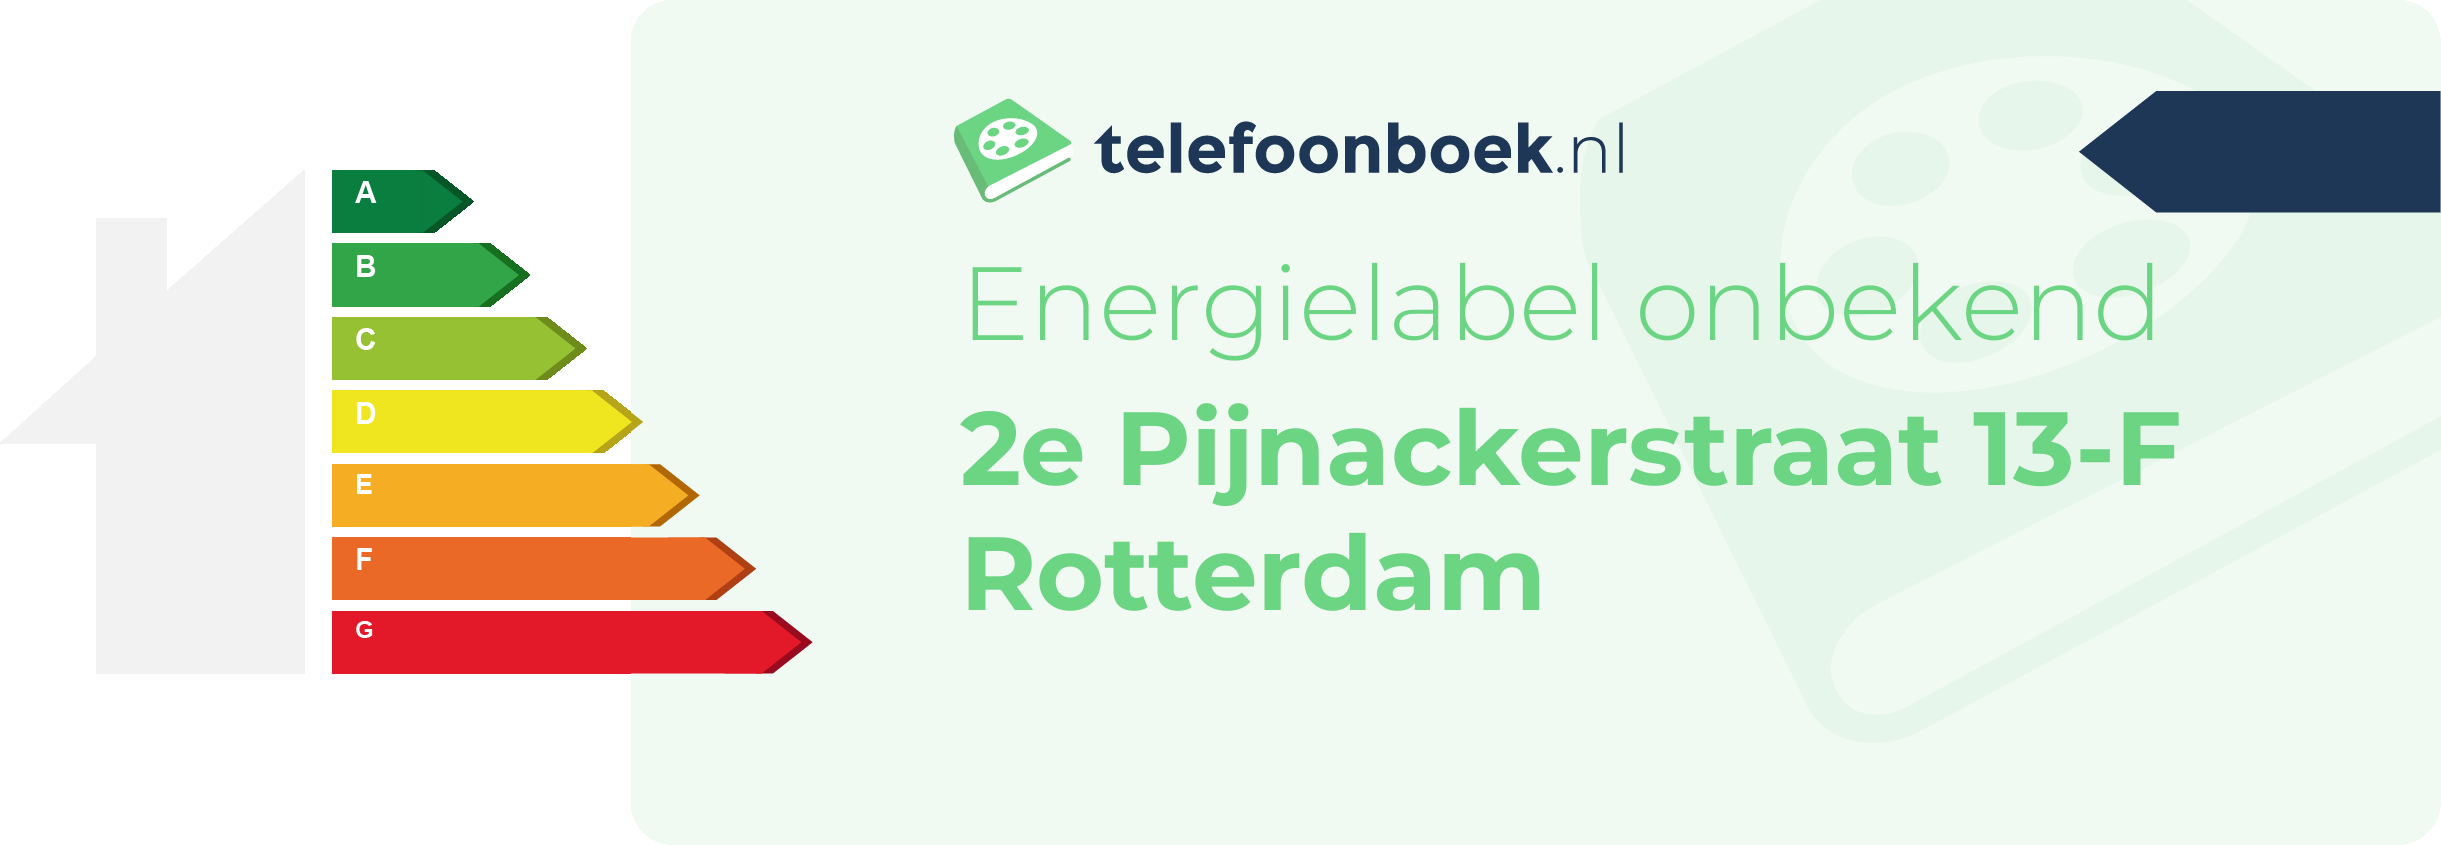 Energielabel 2e Pijnackerstraat 13-F Rotterdam